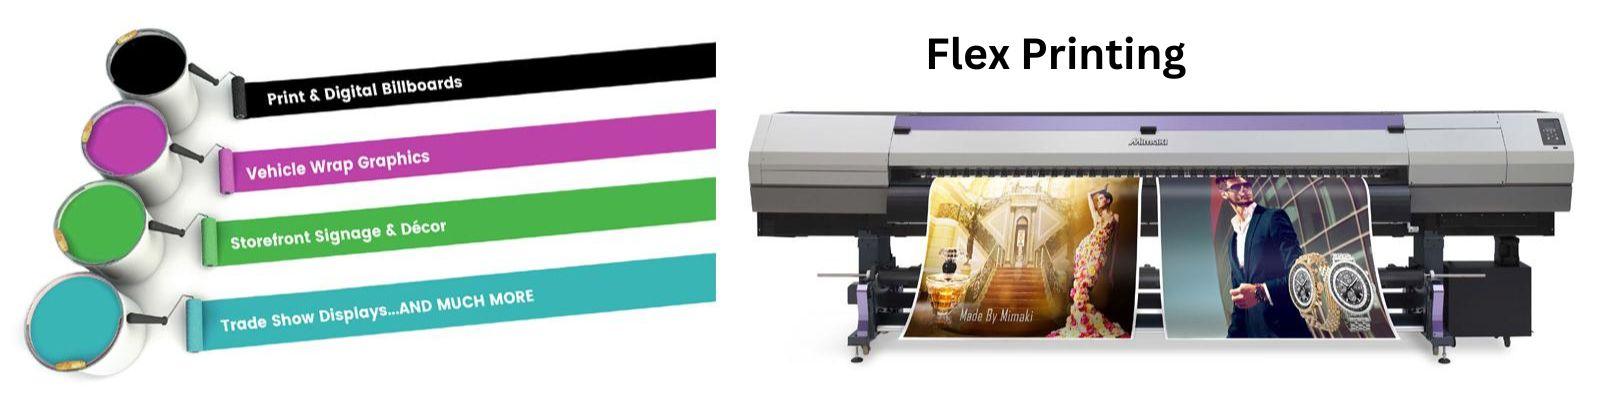 flex printing